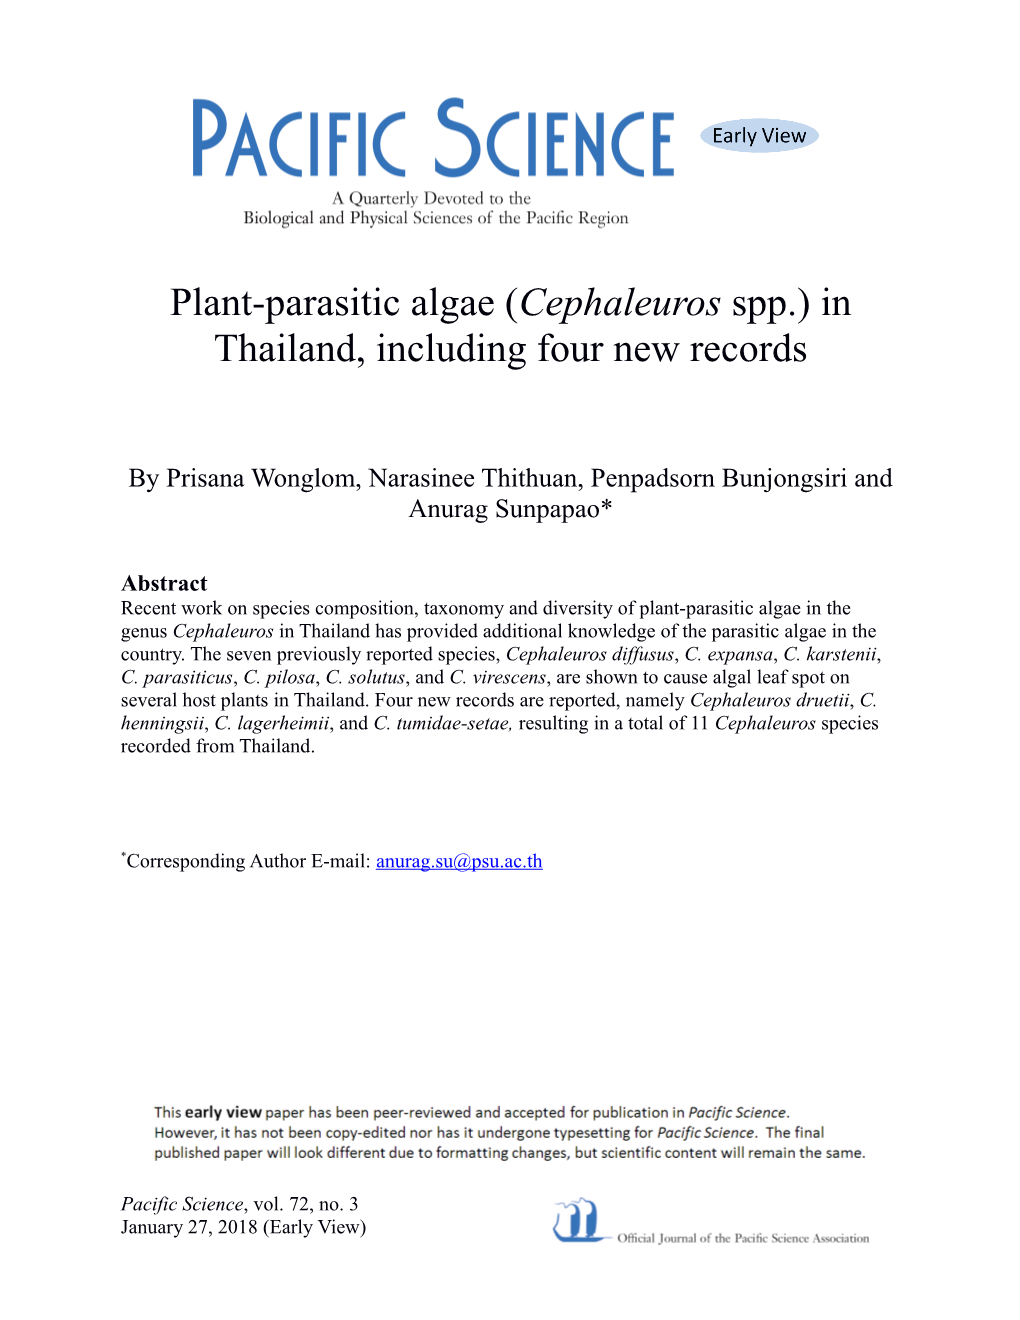 Plant-Parasitic Algae (Cephaleuros Spp.) in Thailand, Including Four New Records